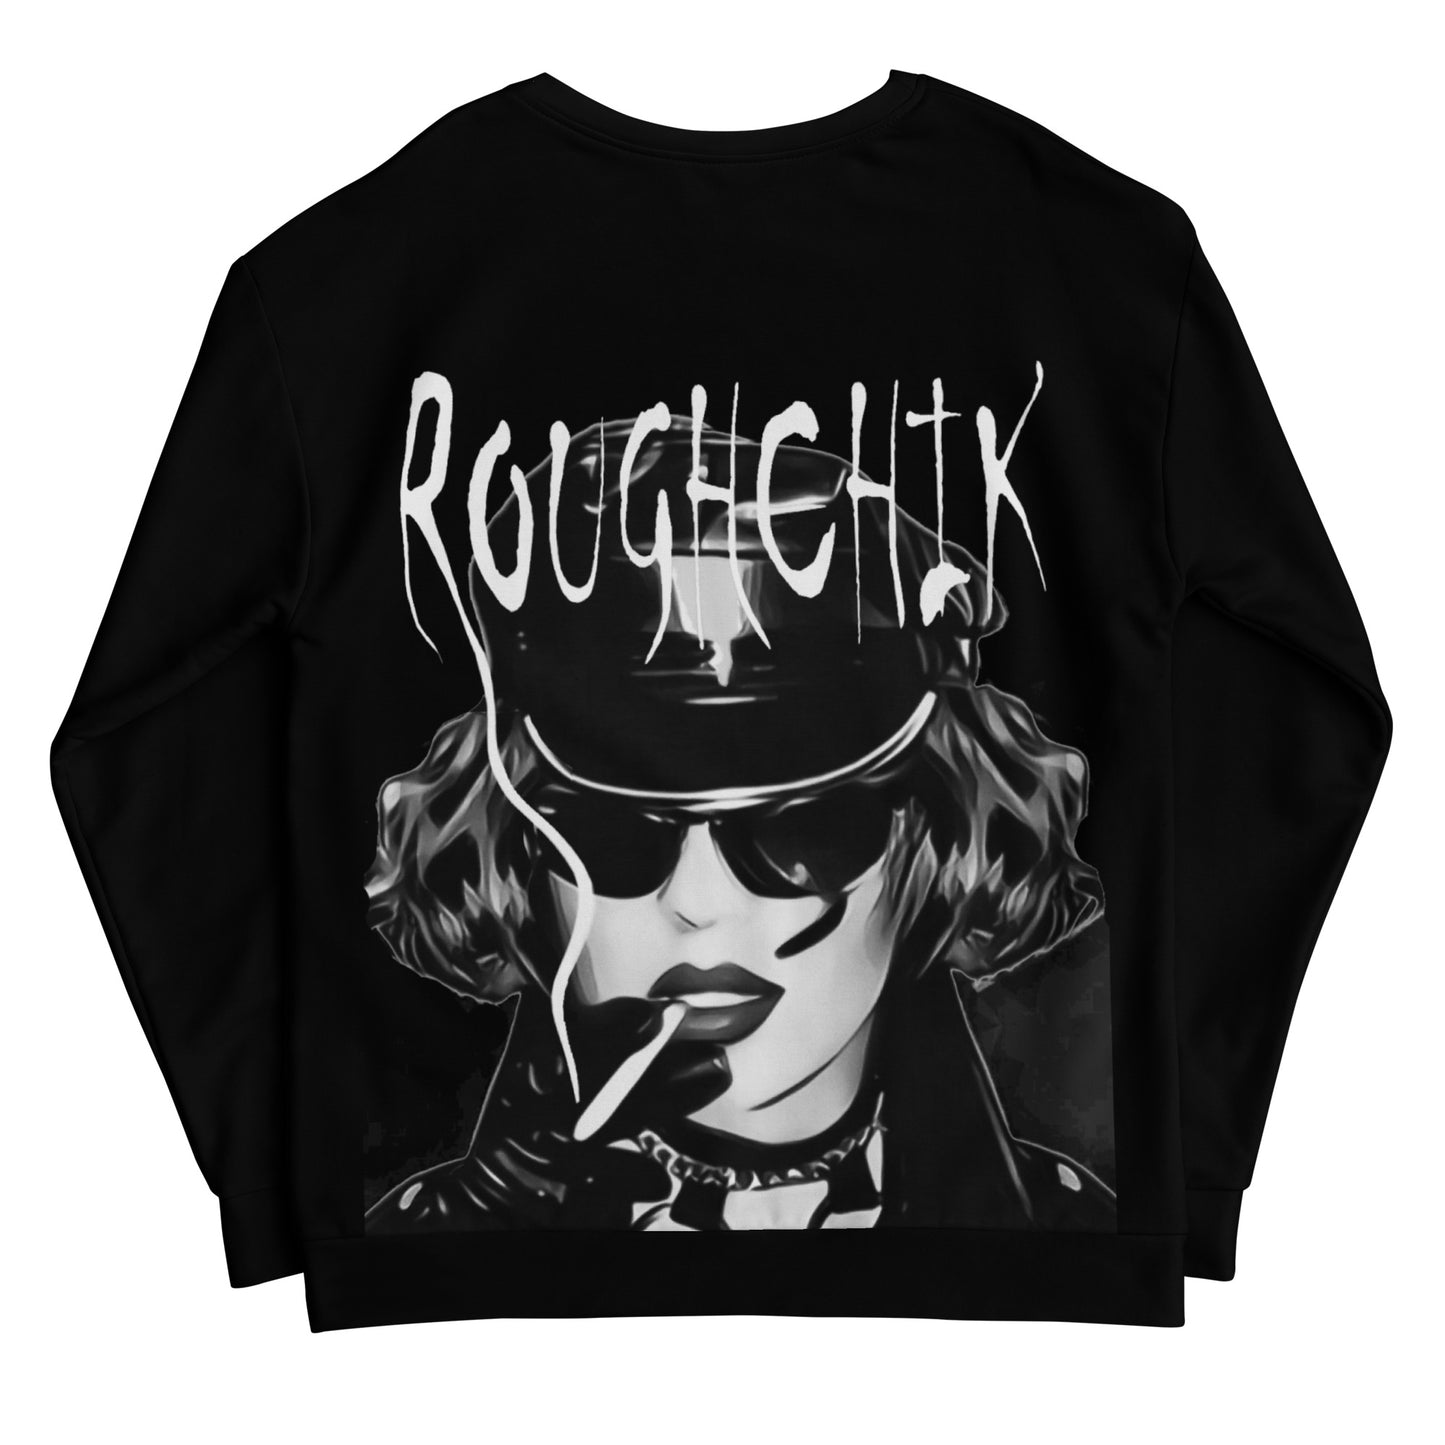 ROUGHCHIK LOGO Sweatshirt - BLACK